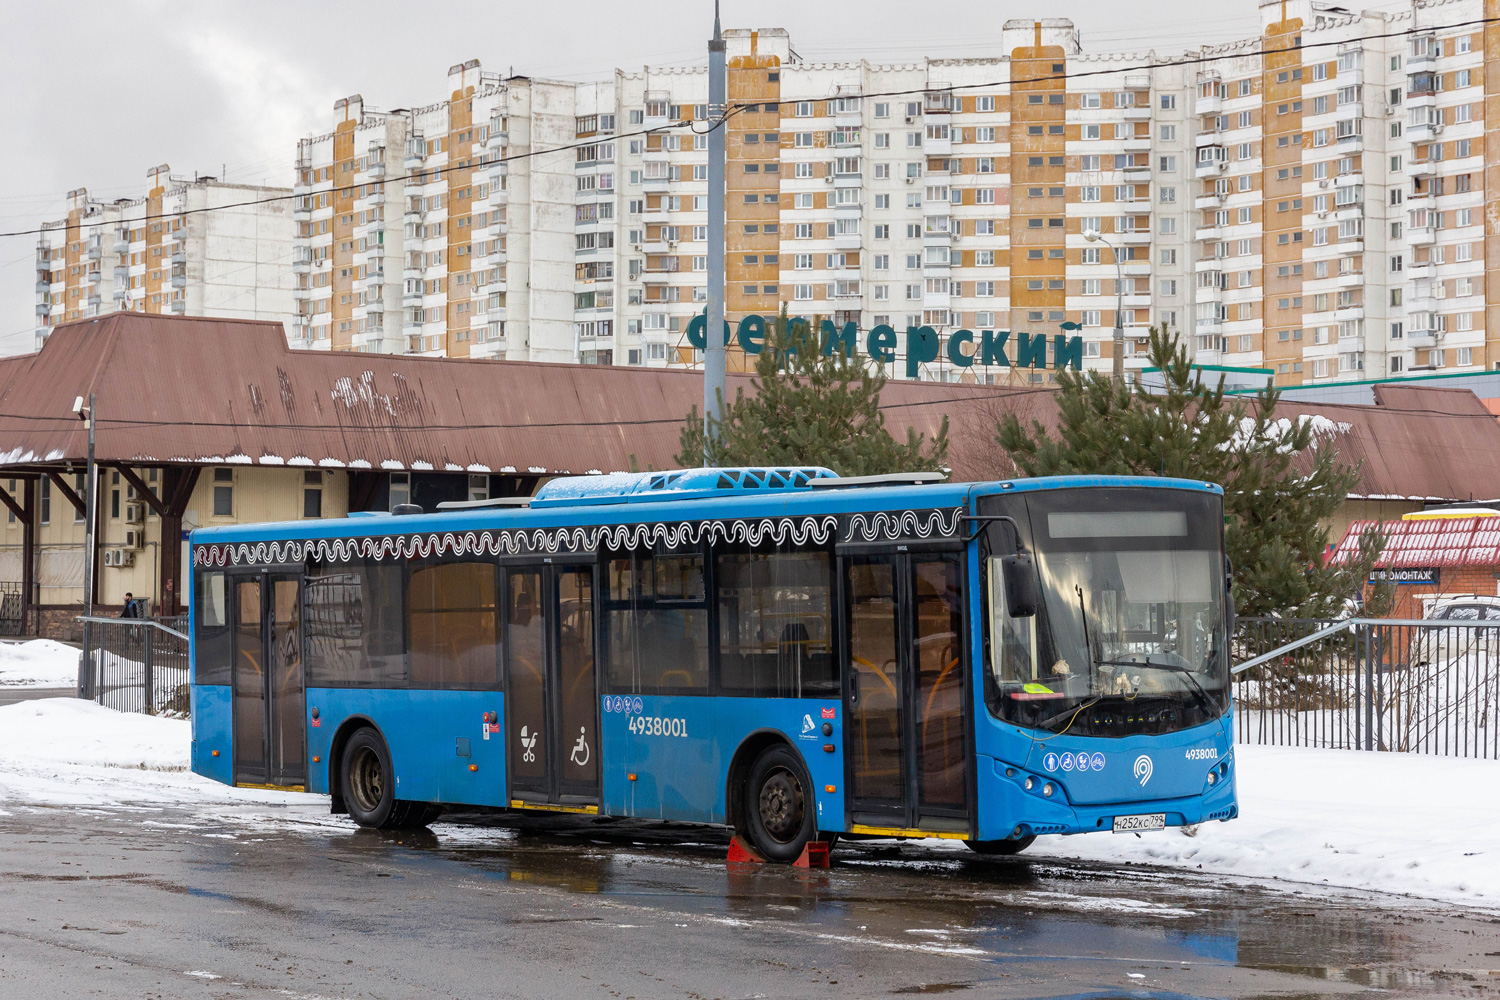 Maskava, Volgabus-5270.02 № 4938001